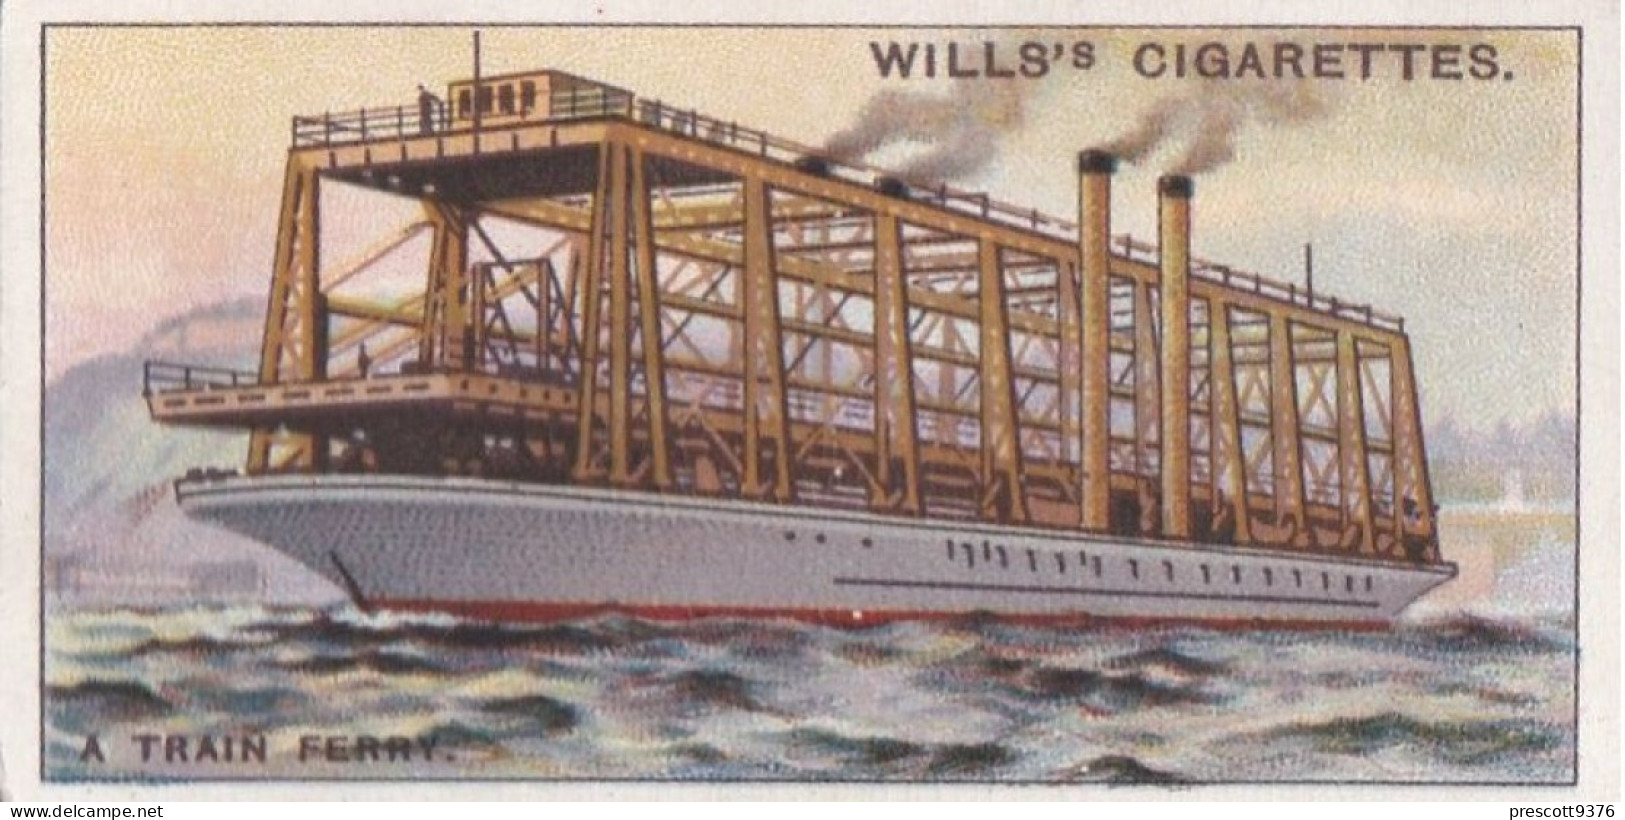 Strange Craft 1931 - Original Wills Cigarette Card - 45 A Train Ferry - Wills